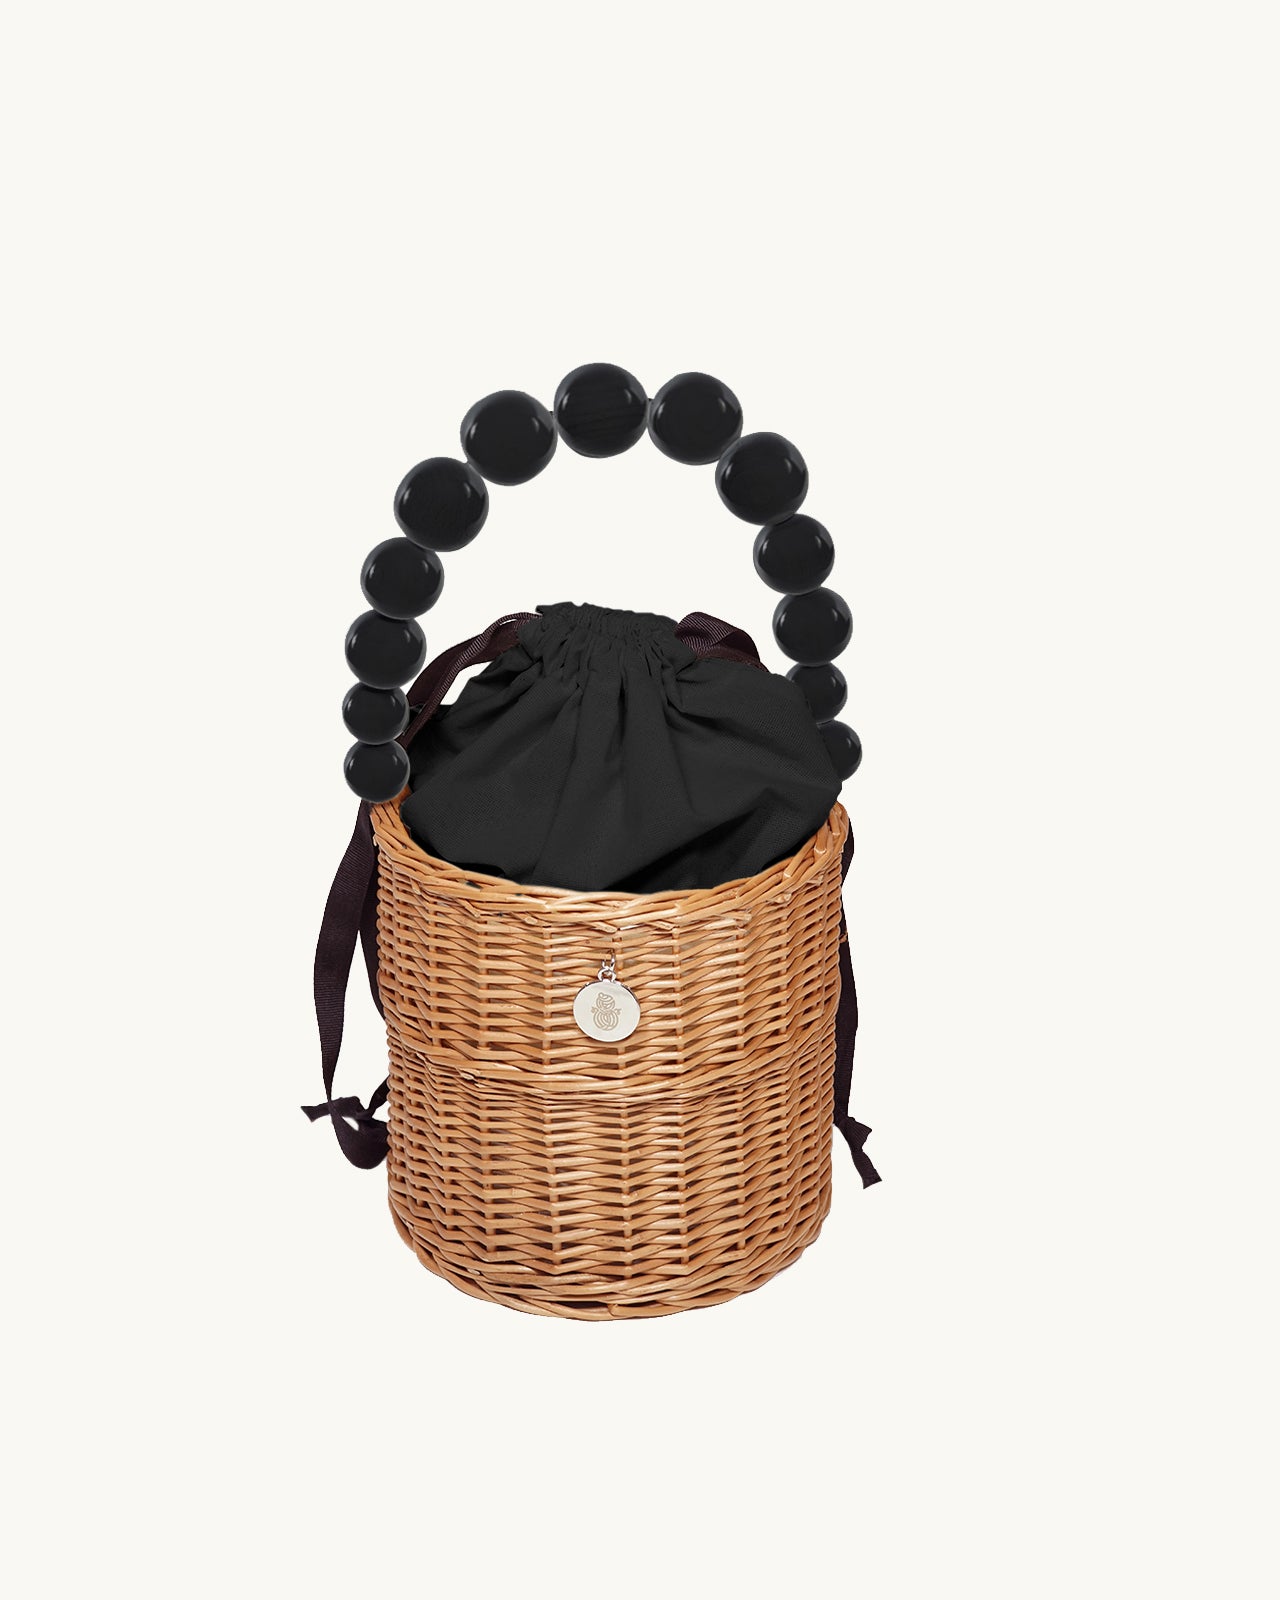 Ladybead Black Wicker Basket no. 2